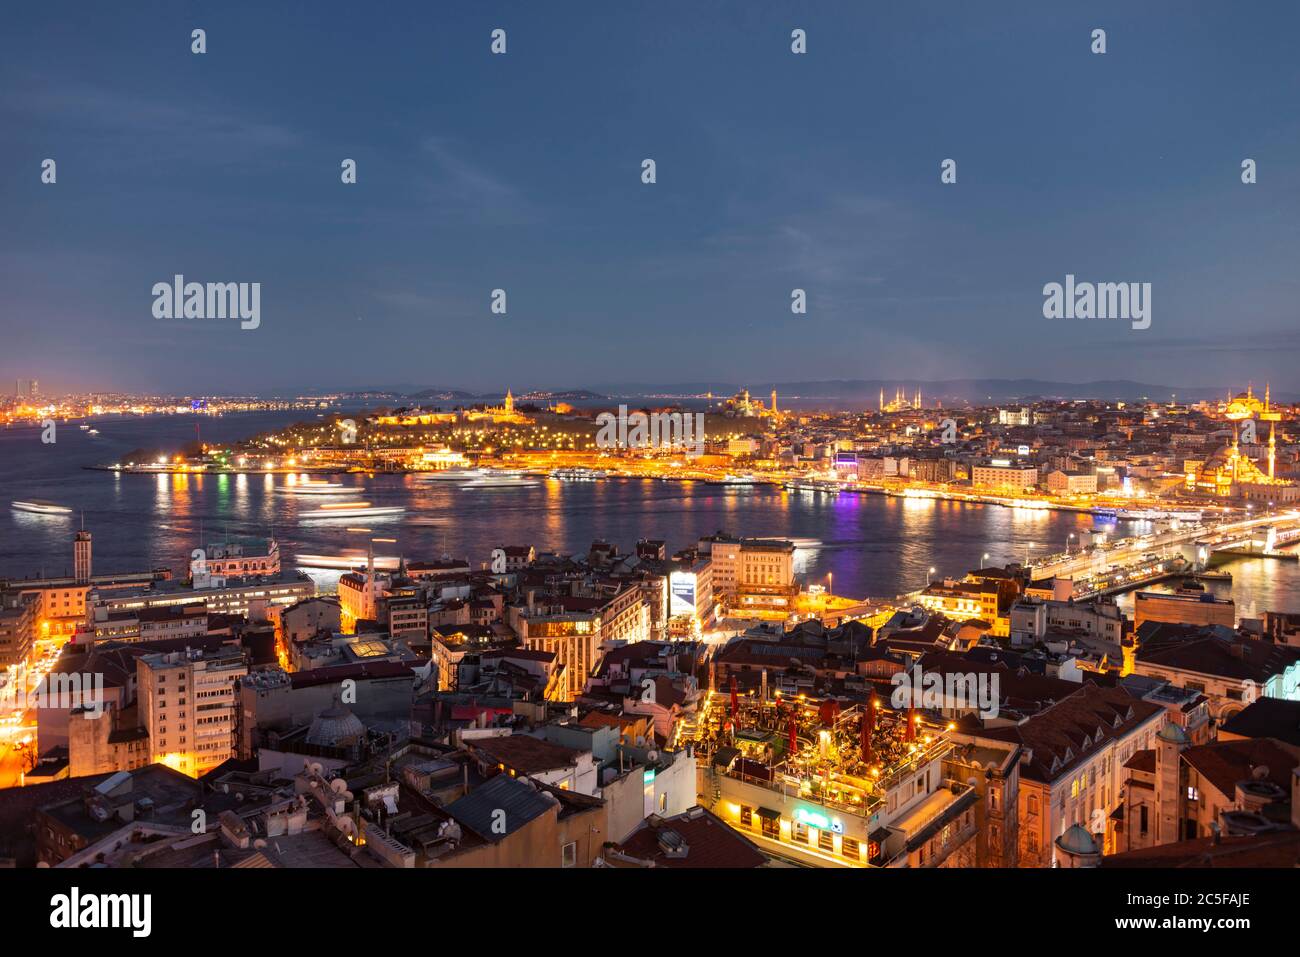 City view at dusk, Yeni Cami mosque and Beyazit Camii, Sultan Ahmet Camii and Hagia Sophia mosque, Galata Bridge, Golden Horn, Bosporus, Fatih Stock Photo